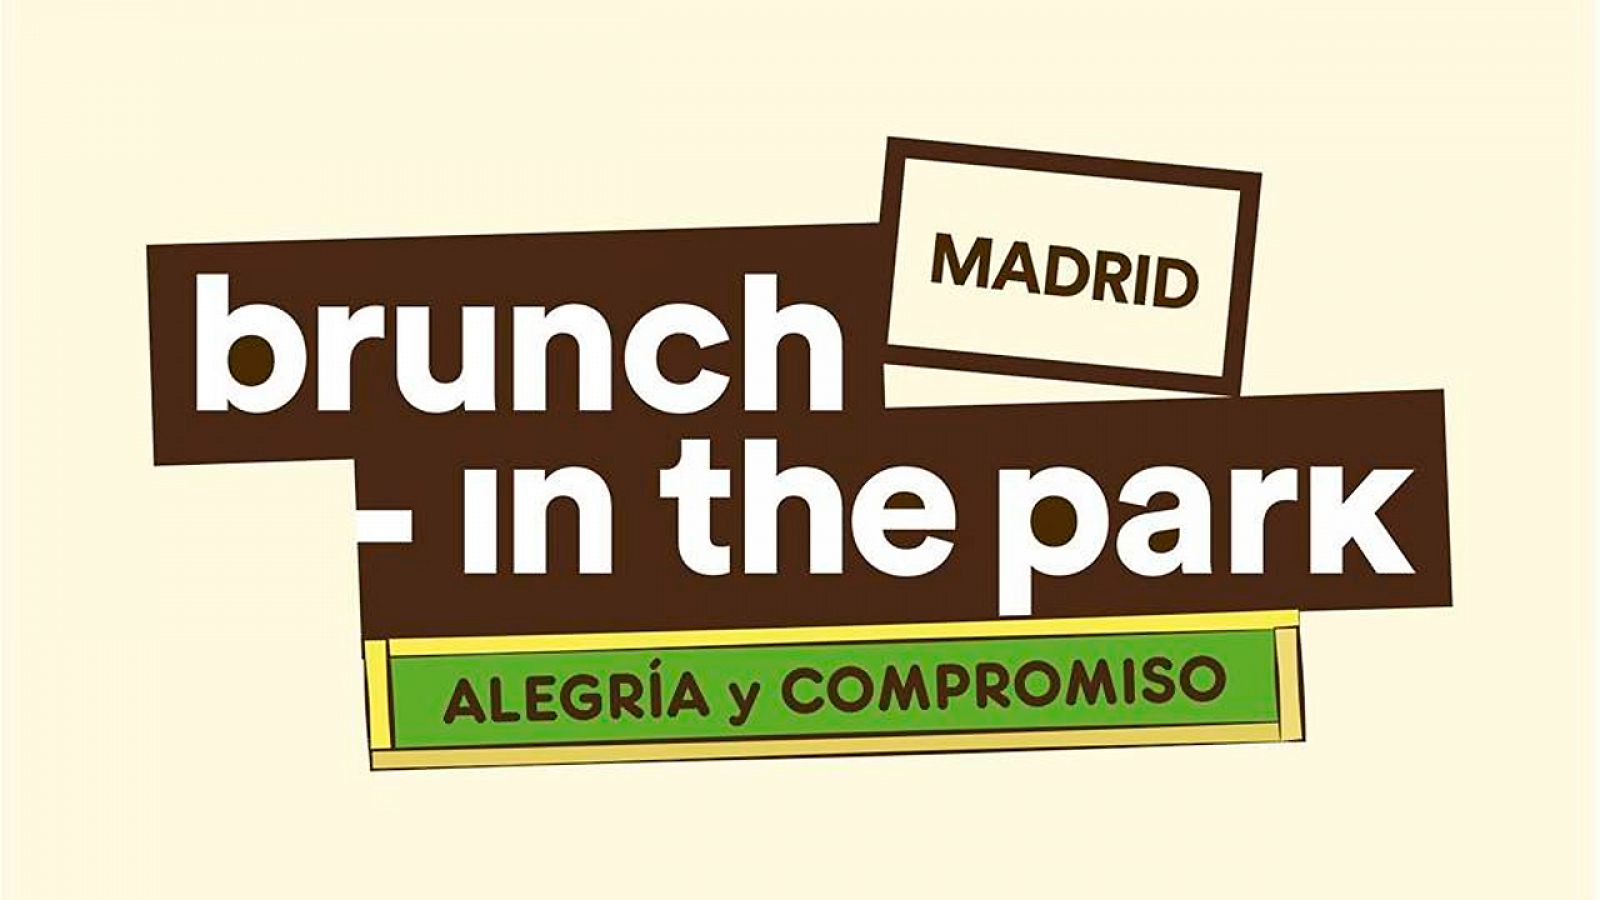 Brunch -In The Park Madrid